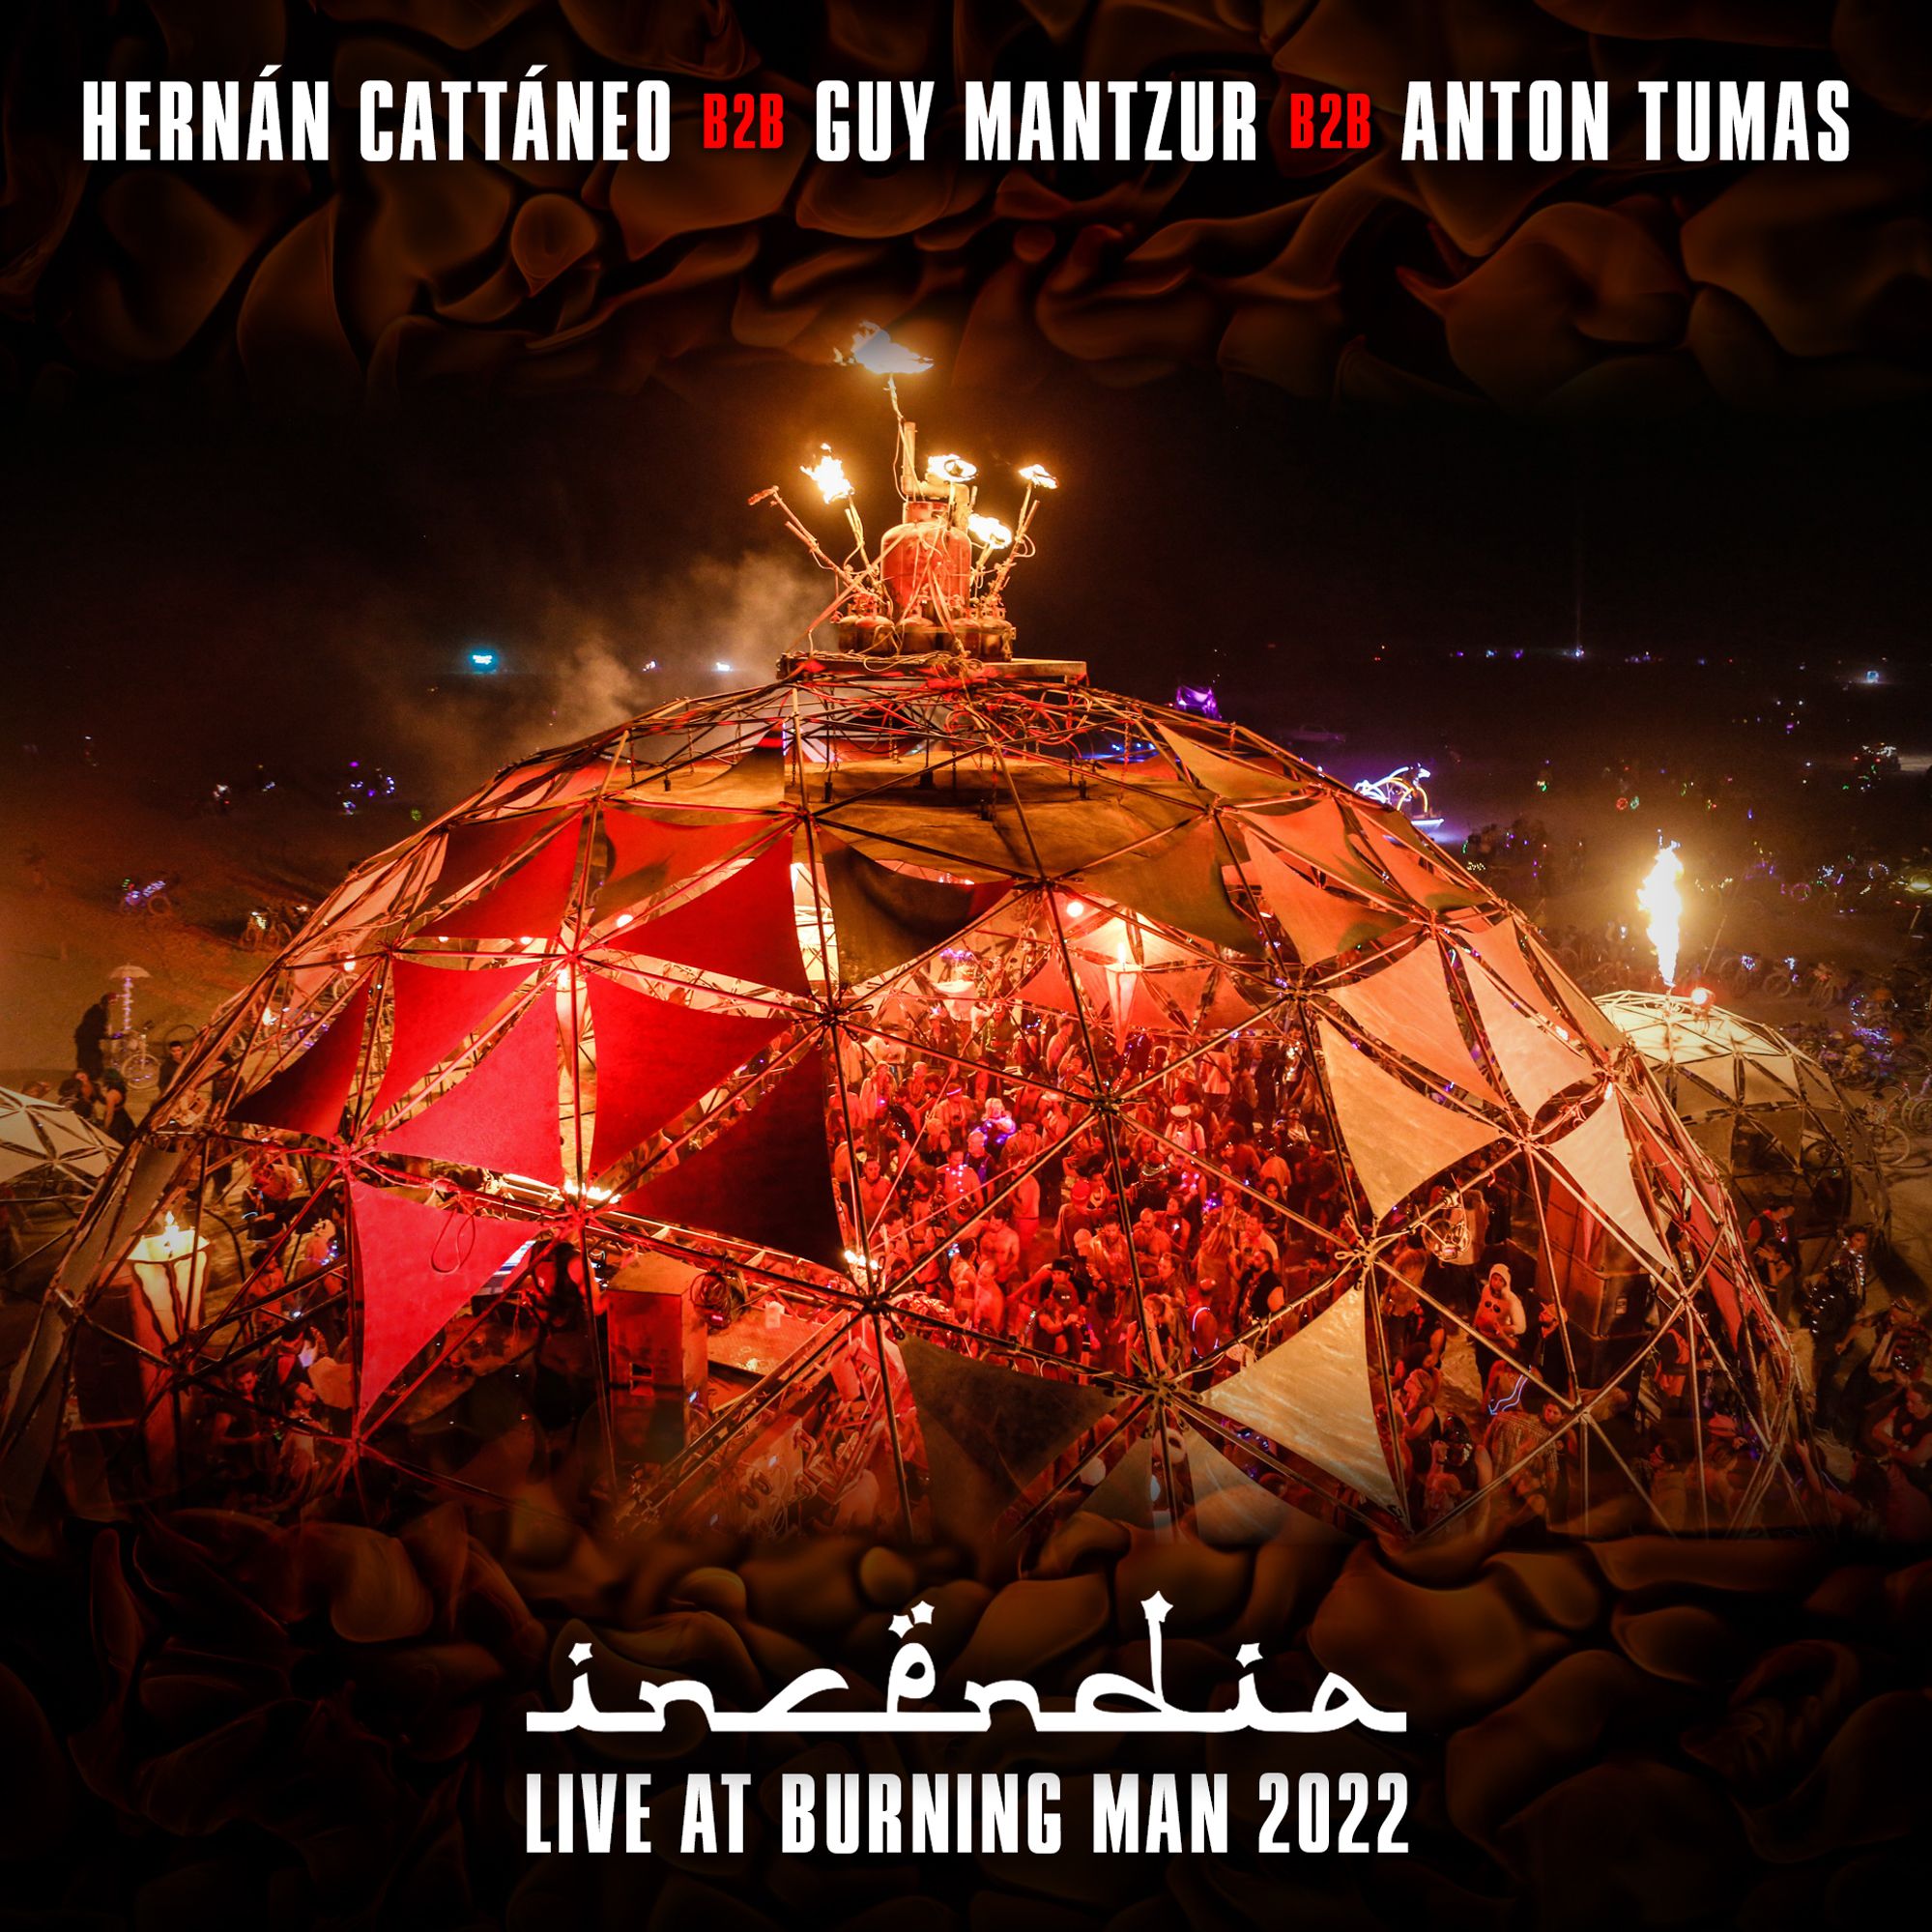 Descărcați! Hernan Cattaneo, Guy Mantzur, Anton Tumas B3B - Incendia / Burning Man 2022